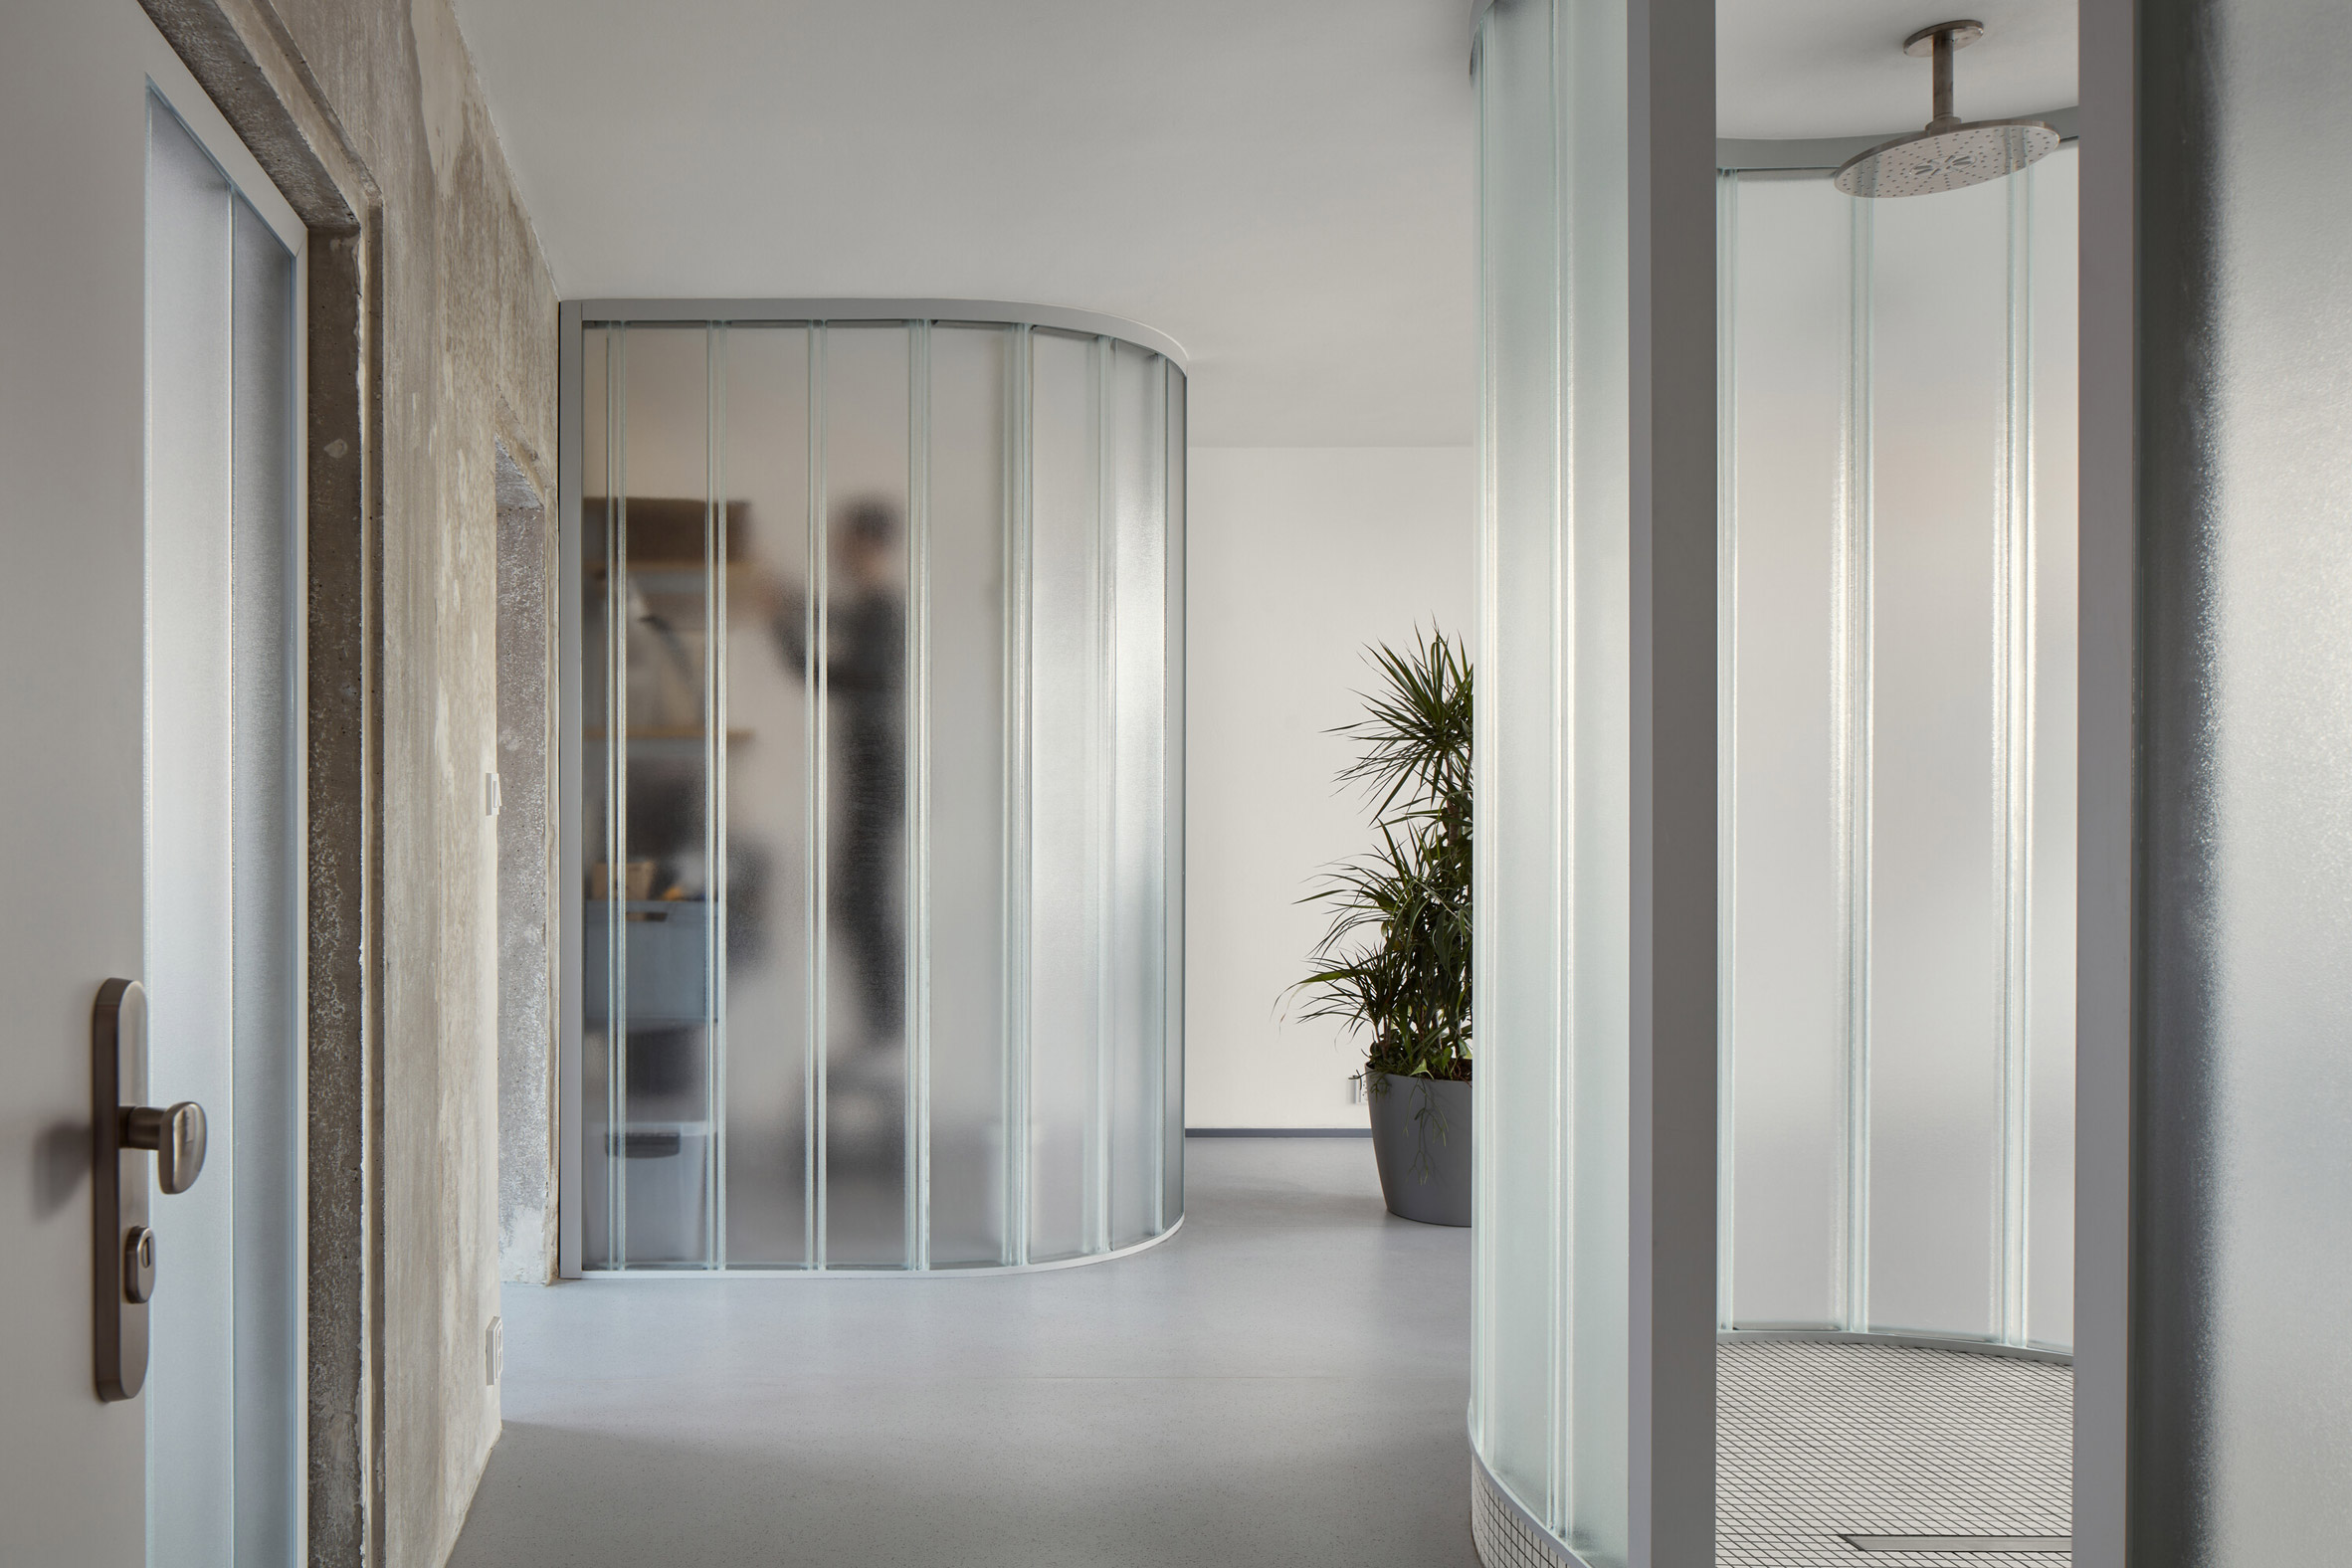 Neuhäusl Hunal使用曲面玻璃隔板分隔布拉格的雕塑家公寓|ART-Arrakis | 建筑室内设计的创新与灵感